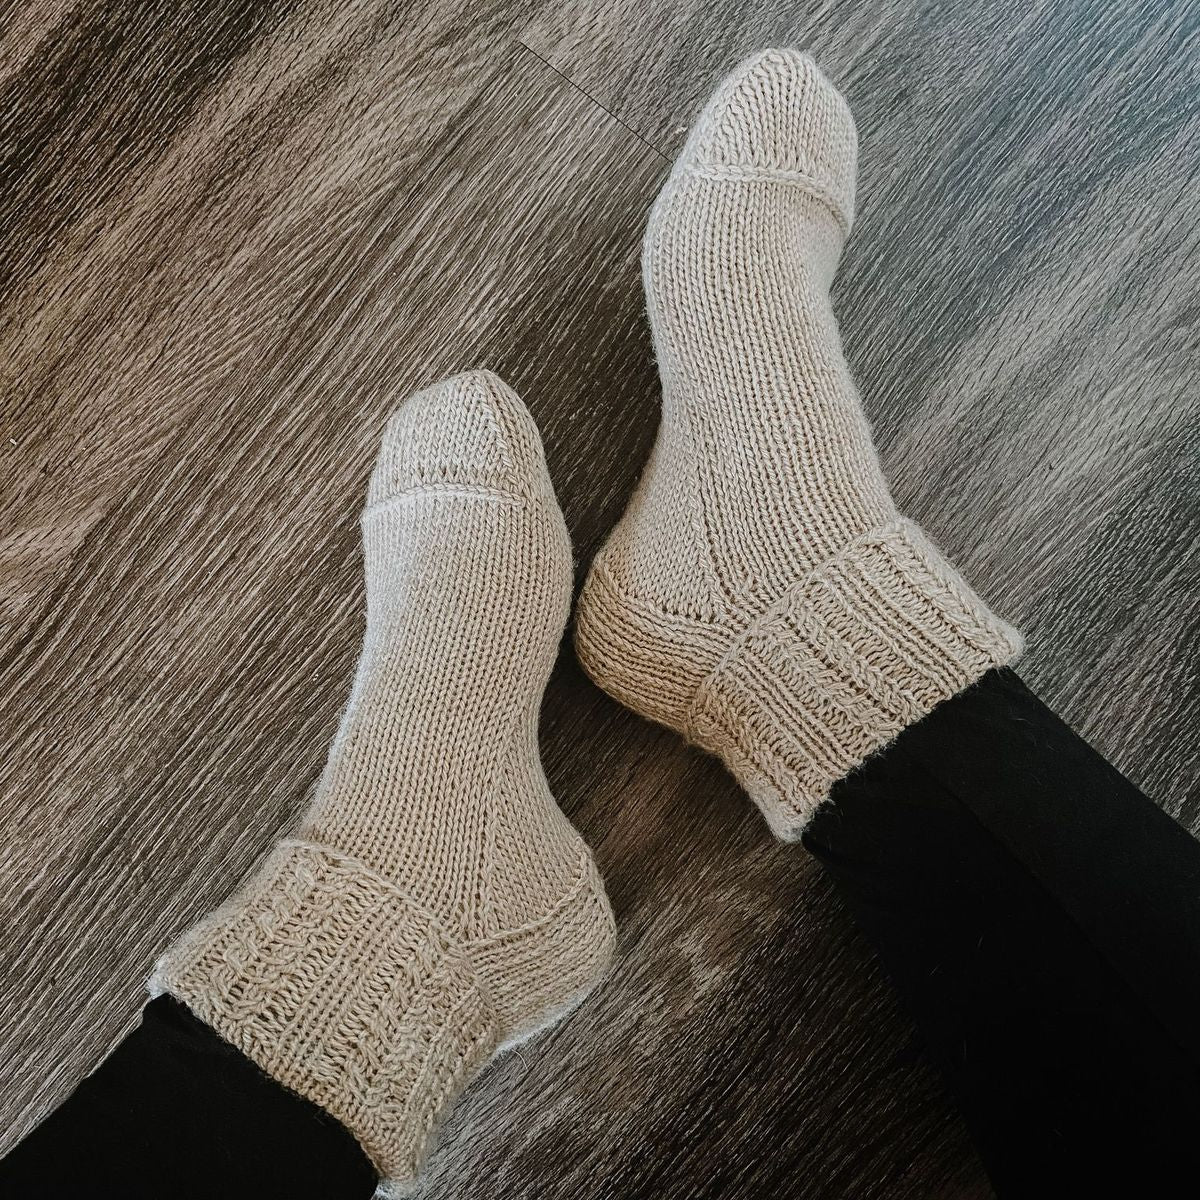 Calliope Socks - Knitting Pattern